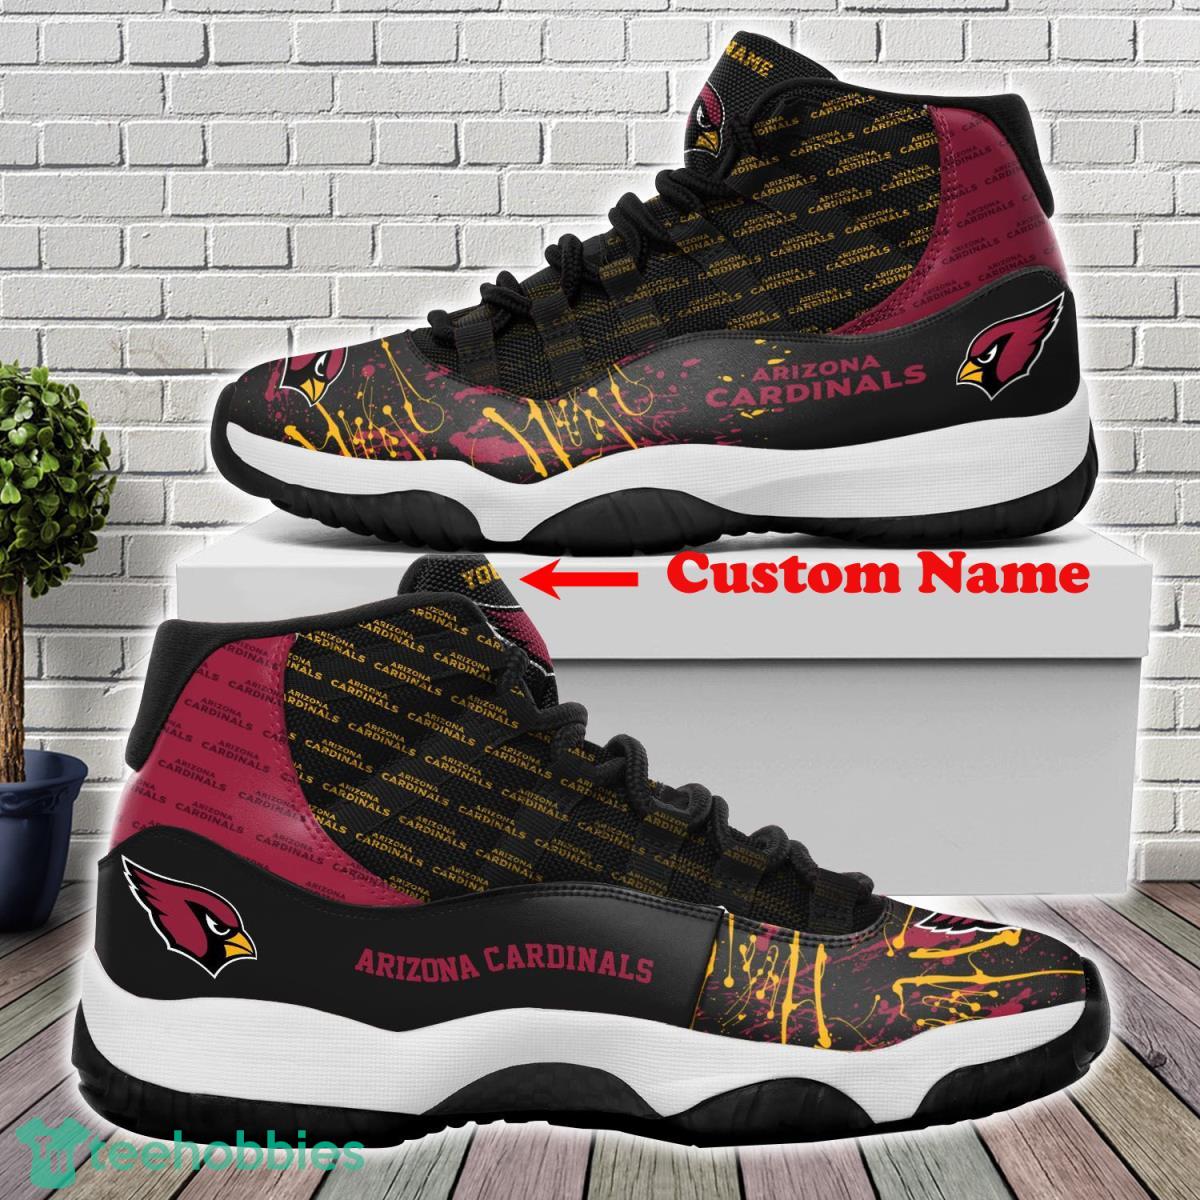 Arizona Cardinals Custom Name Air Jordan 11 Sneakers For Fans Product Photo 1